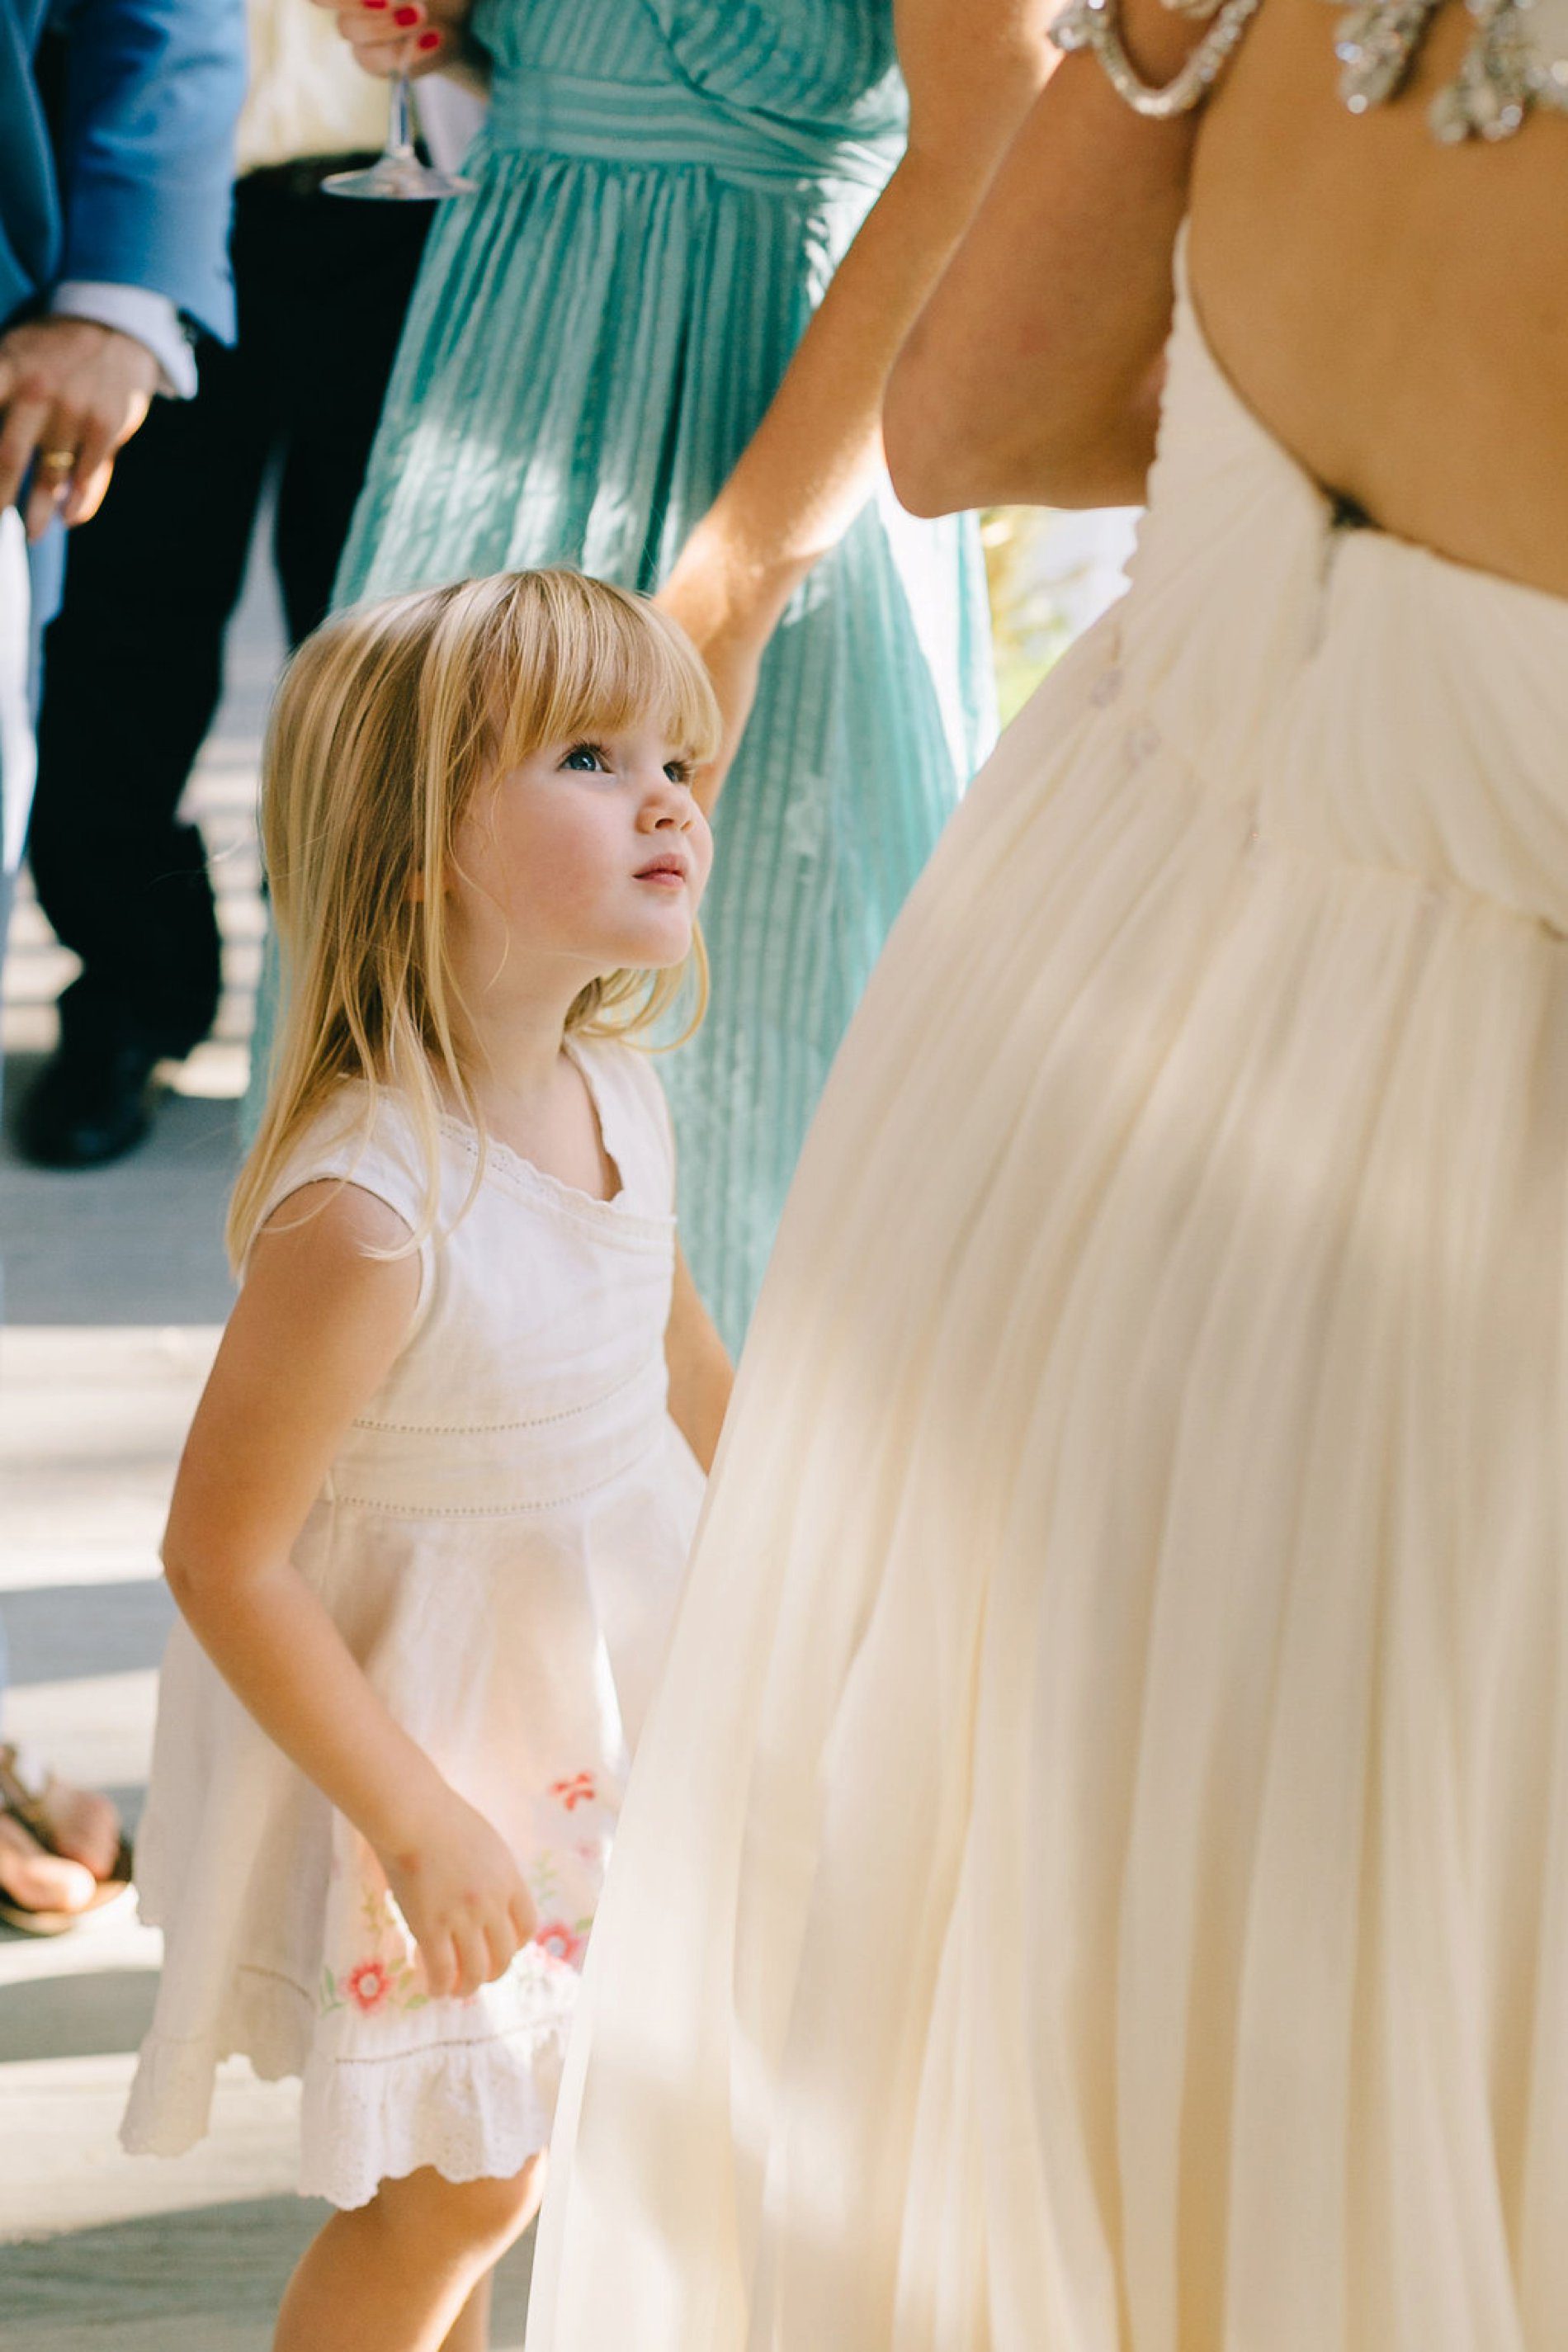 Cute photo of a little girl admiring the bride